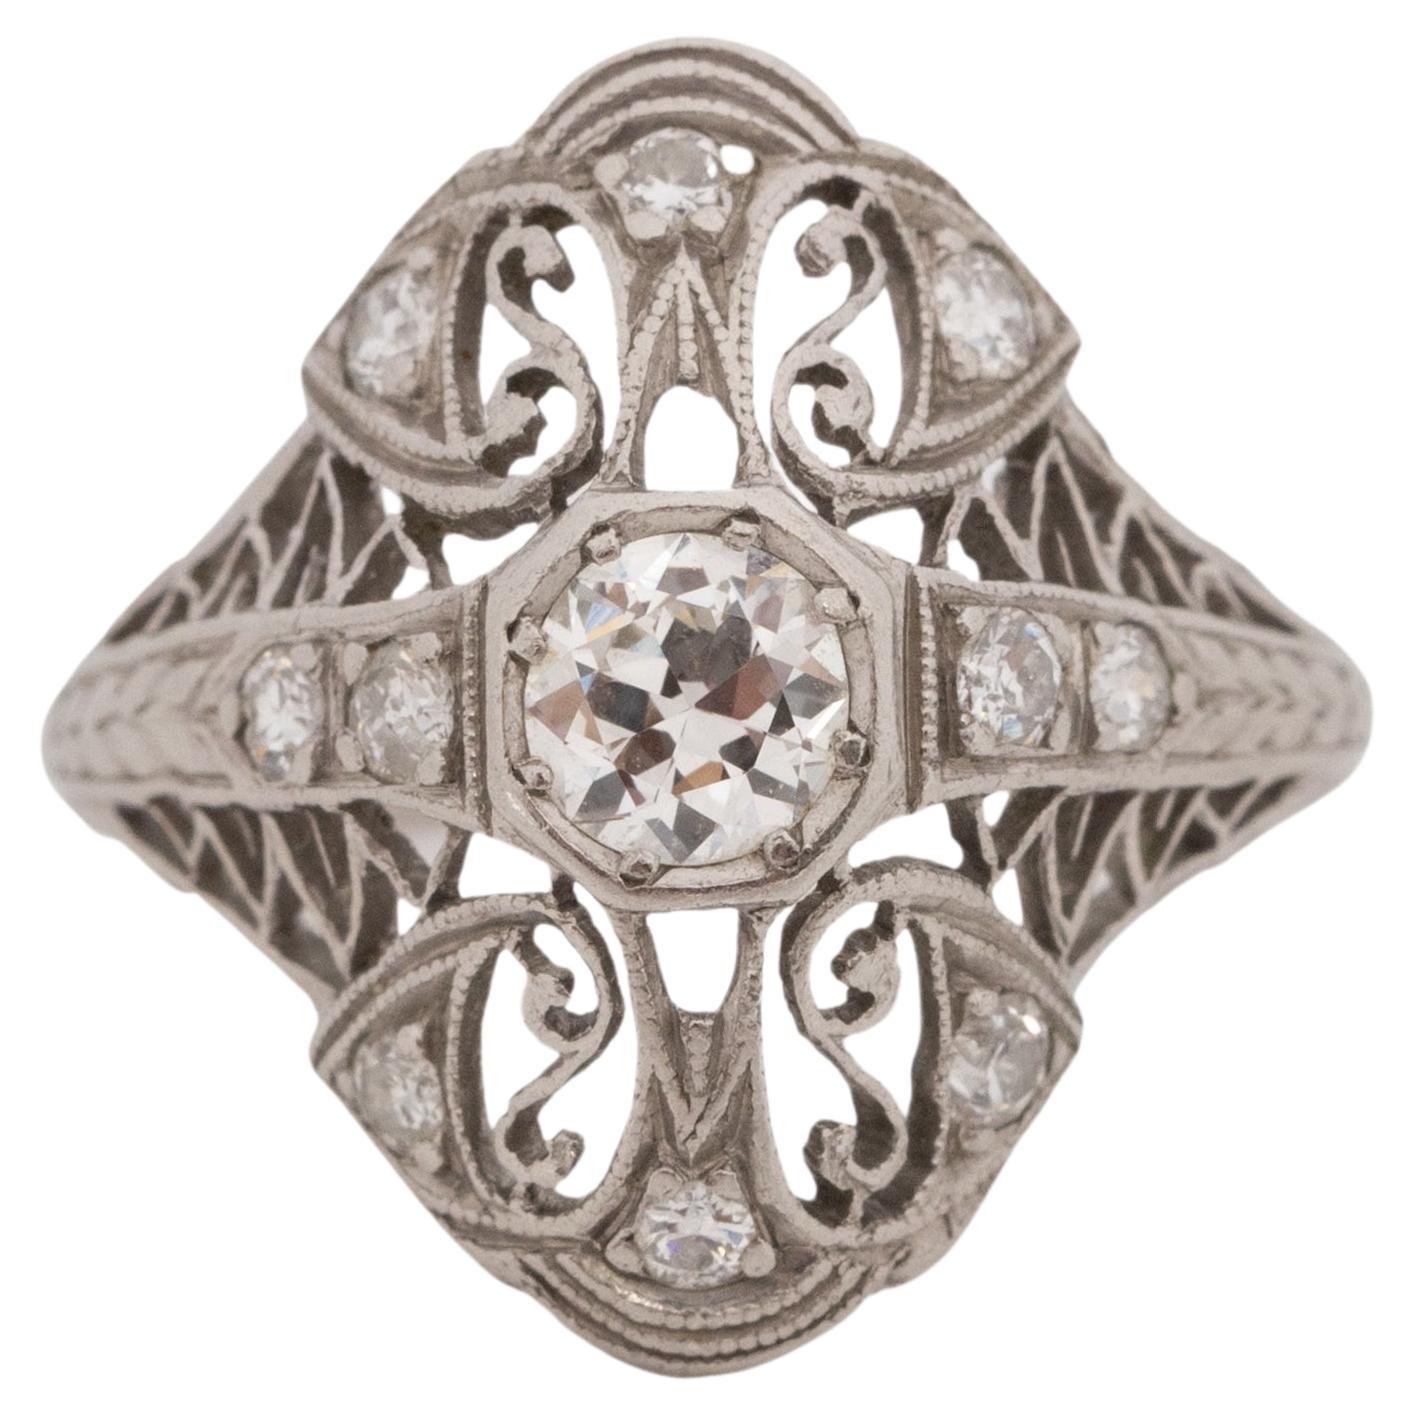 .50 Carat Total Weight Art Deco Diamond Platinum Engagement Ring